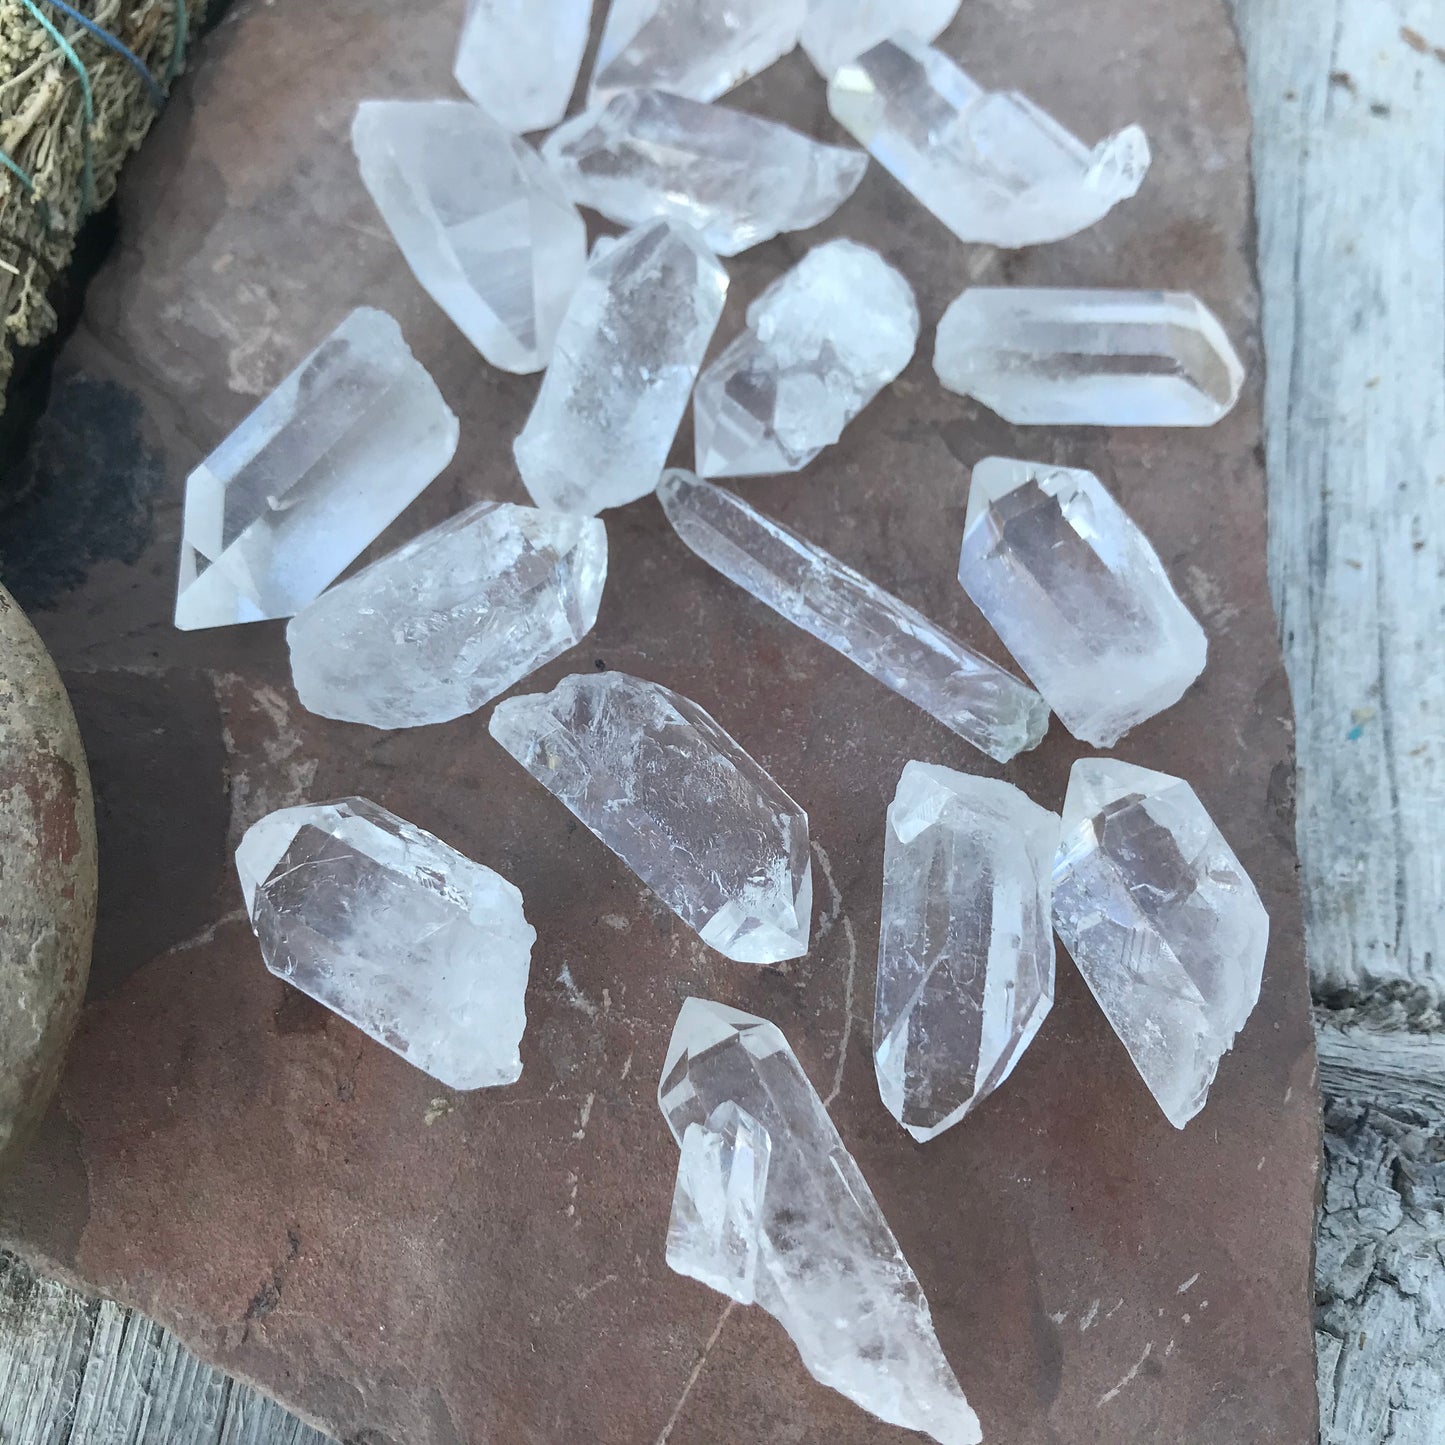 Natural Clear Quartz Crystal, ( 1 1/8" to 1 3/4" long) One Crystal, Metaphysical Quartz Rough 0489